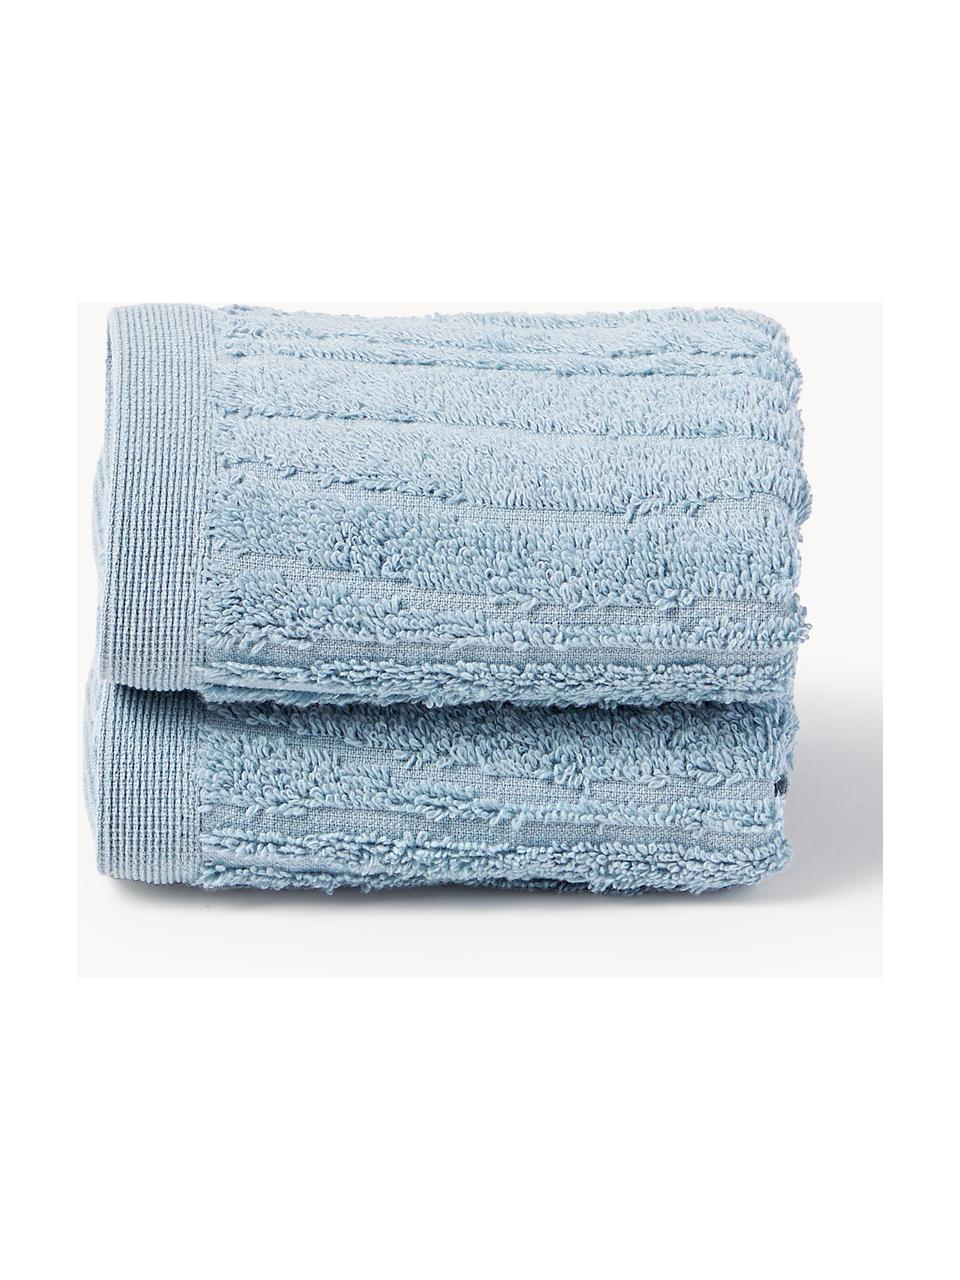 Toallas lavabos de algodón Audrina, tamaños diferentes, Gris azulado, Toalla lavabo, An 50 x L 100 cm, 2 uds.